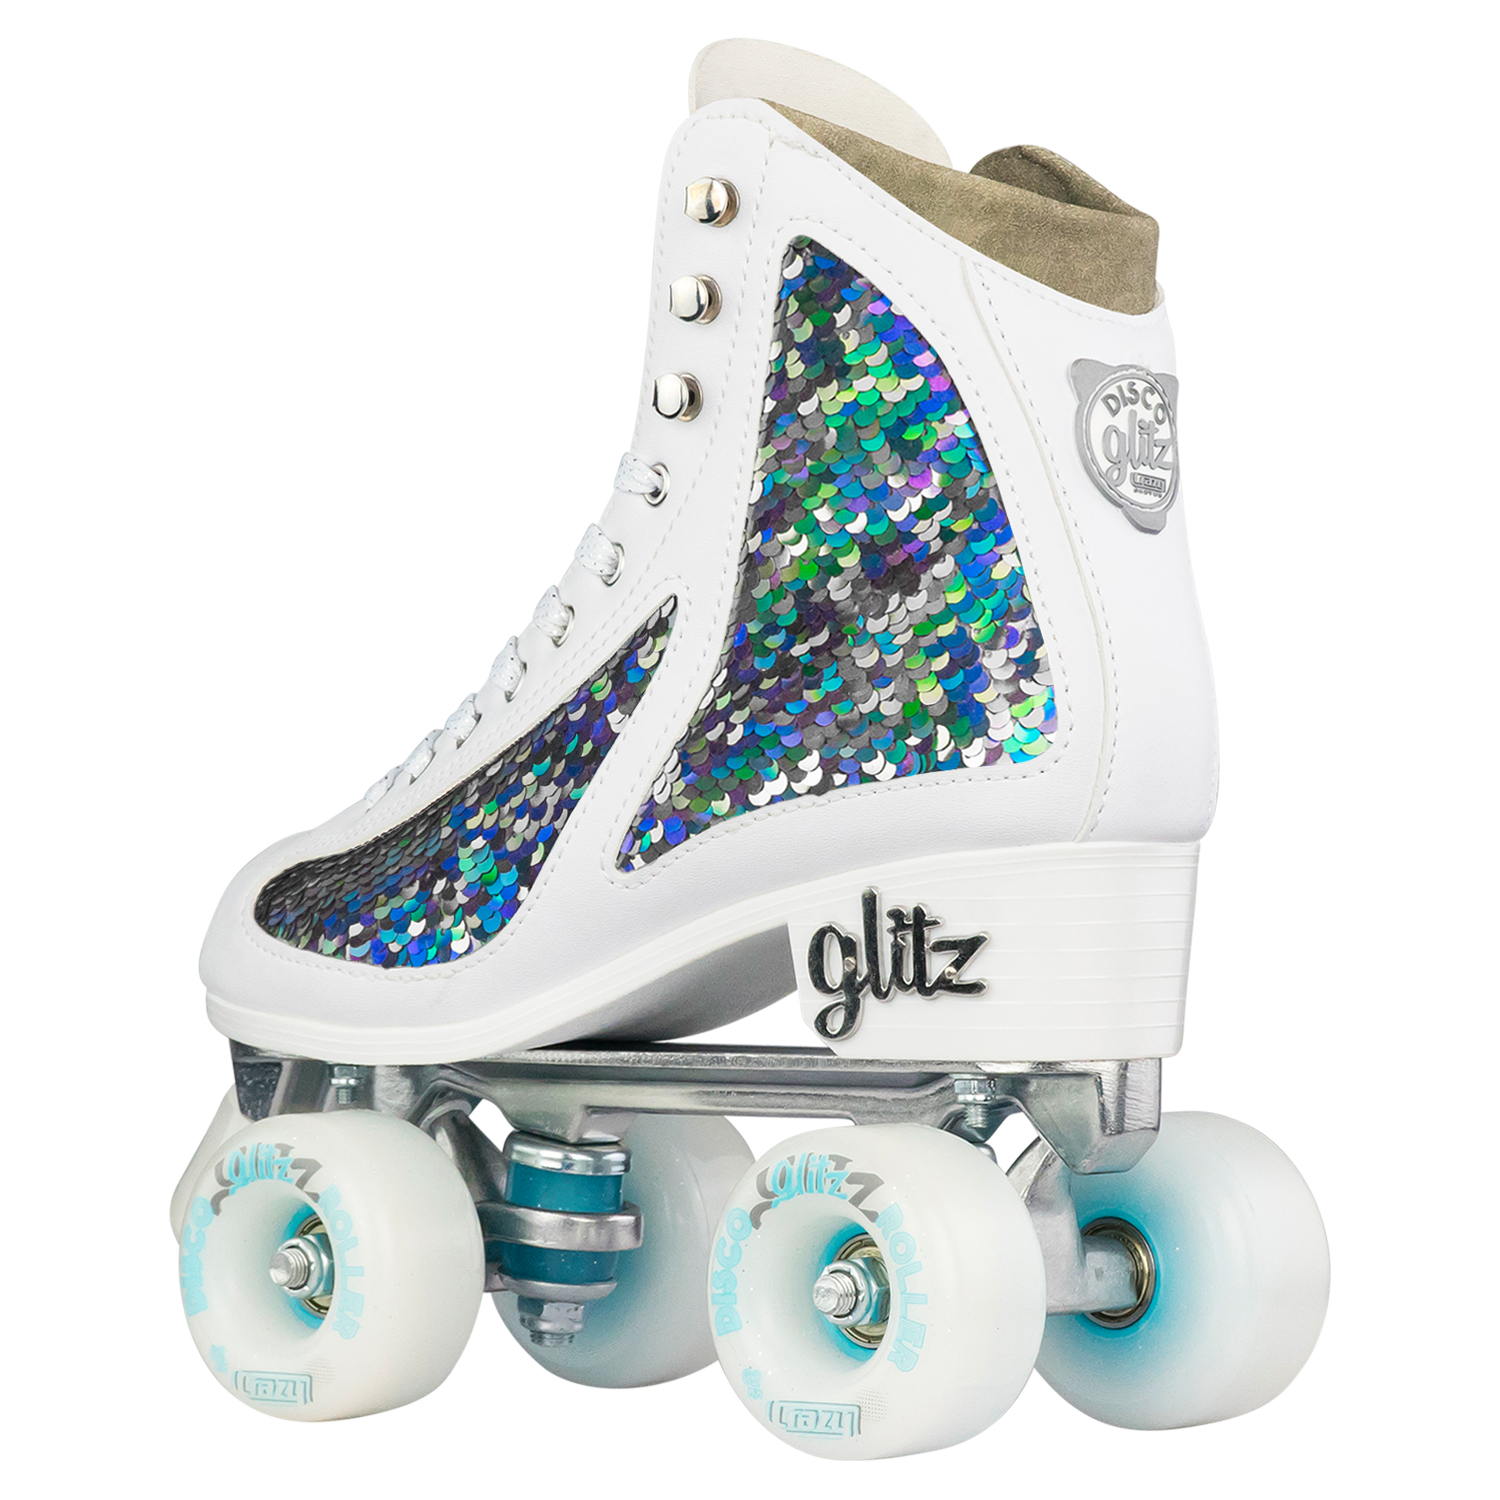 Crazy Skates Glitz Roller Skates | Glitter Sparkle Skates for Women and ...